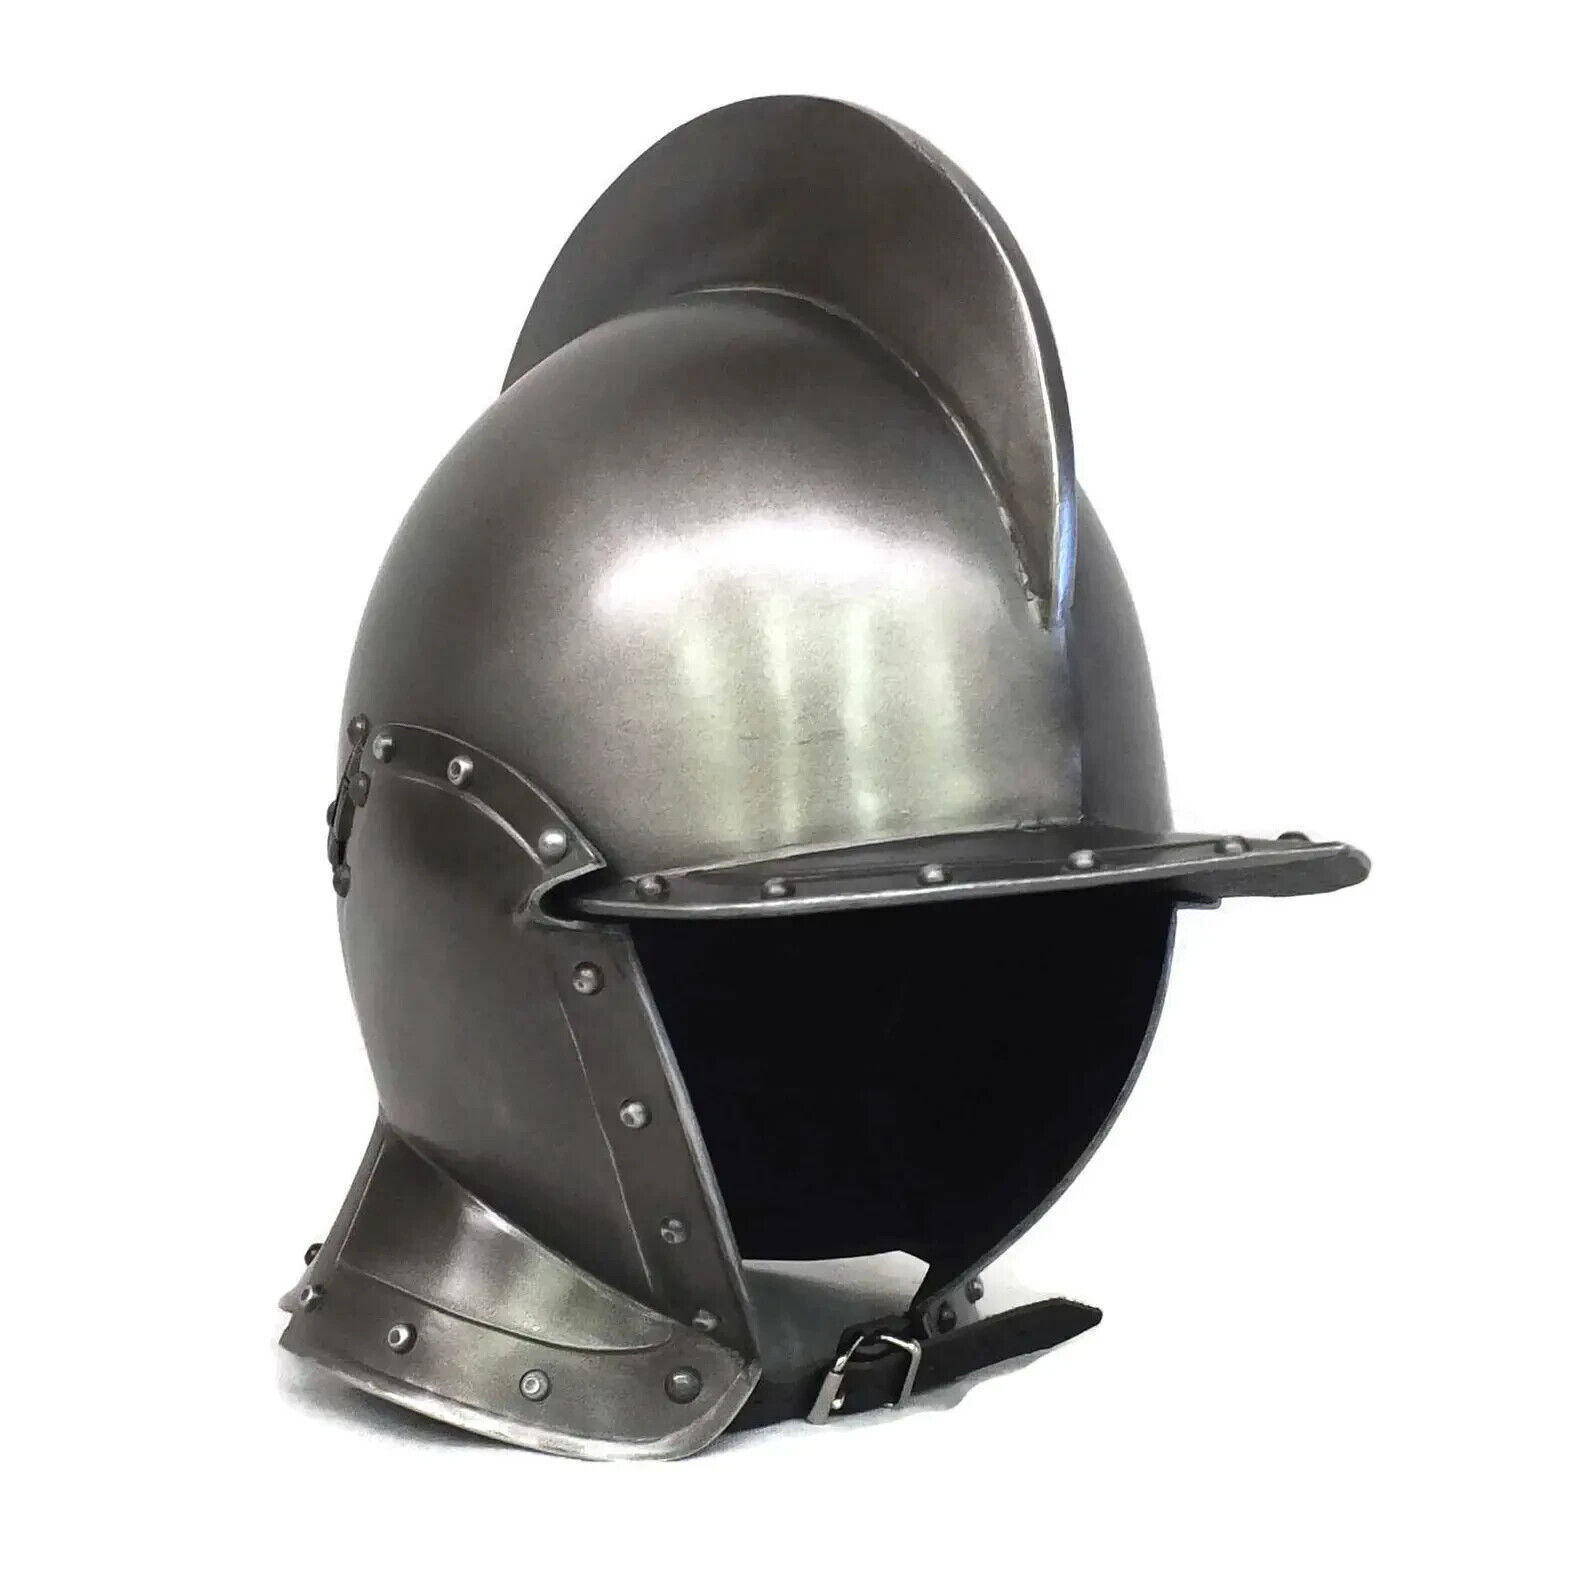 Medieva Knight Steel Armor Helmet Larp Armor, Larp Larp Armor, Burgonet Helmet